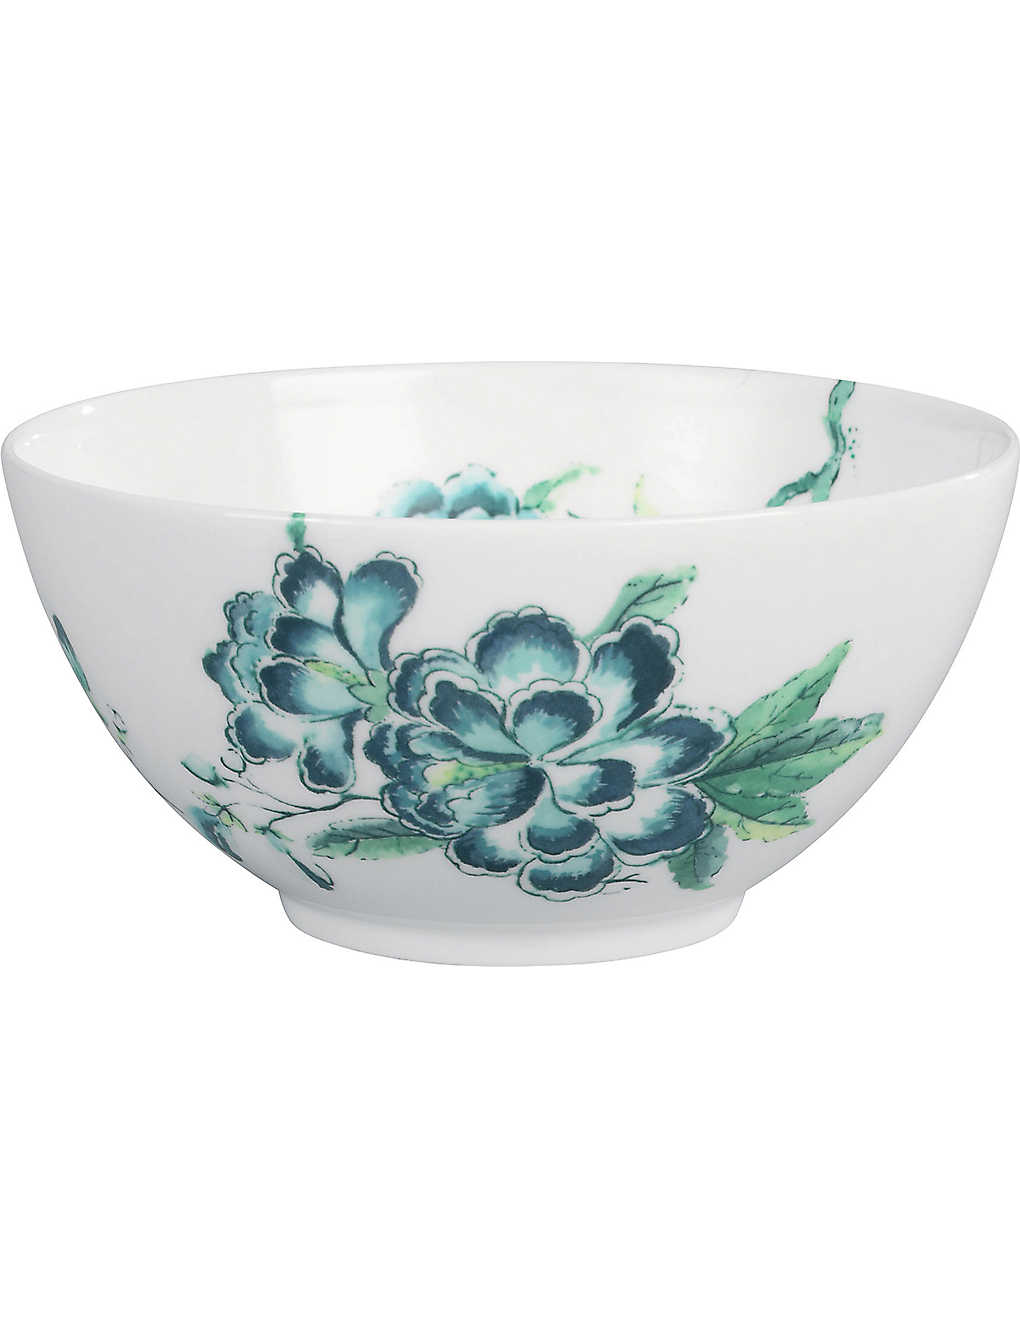 JASPER CONRAN @ WEDGWOOD シノズワリ 白ボウル 14cm Chinoiserie white bowl 14cm